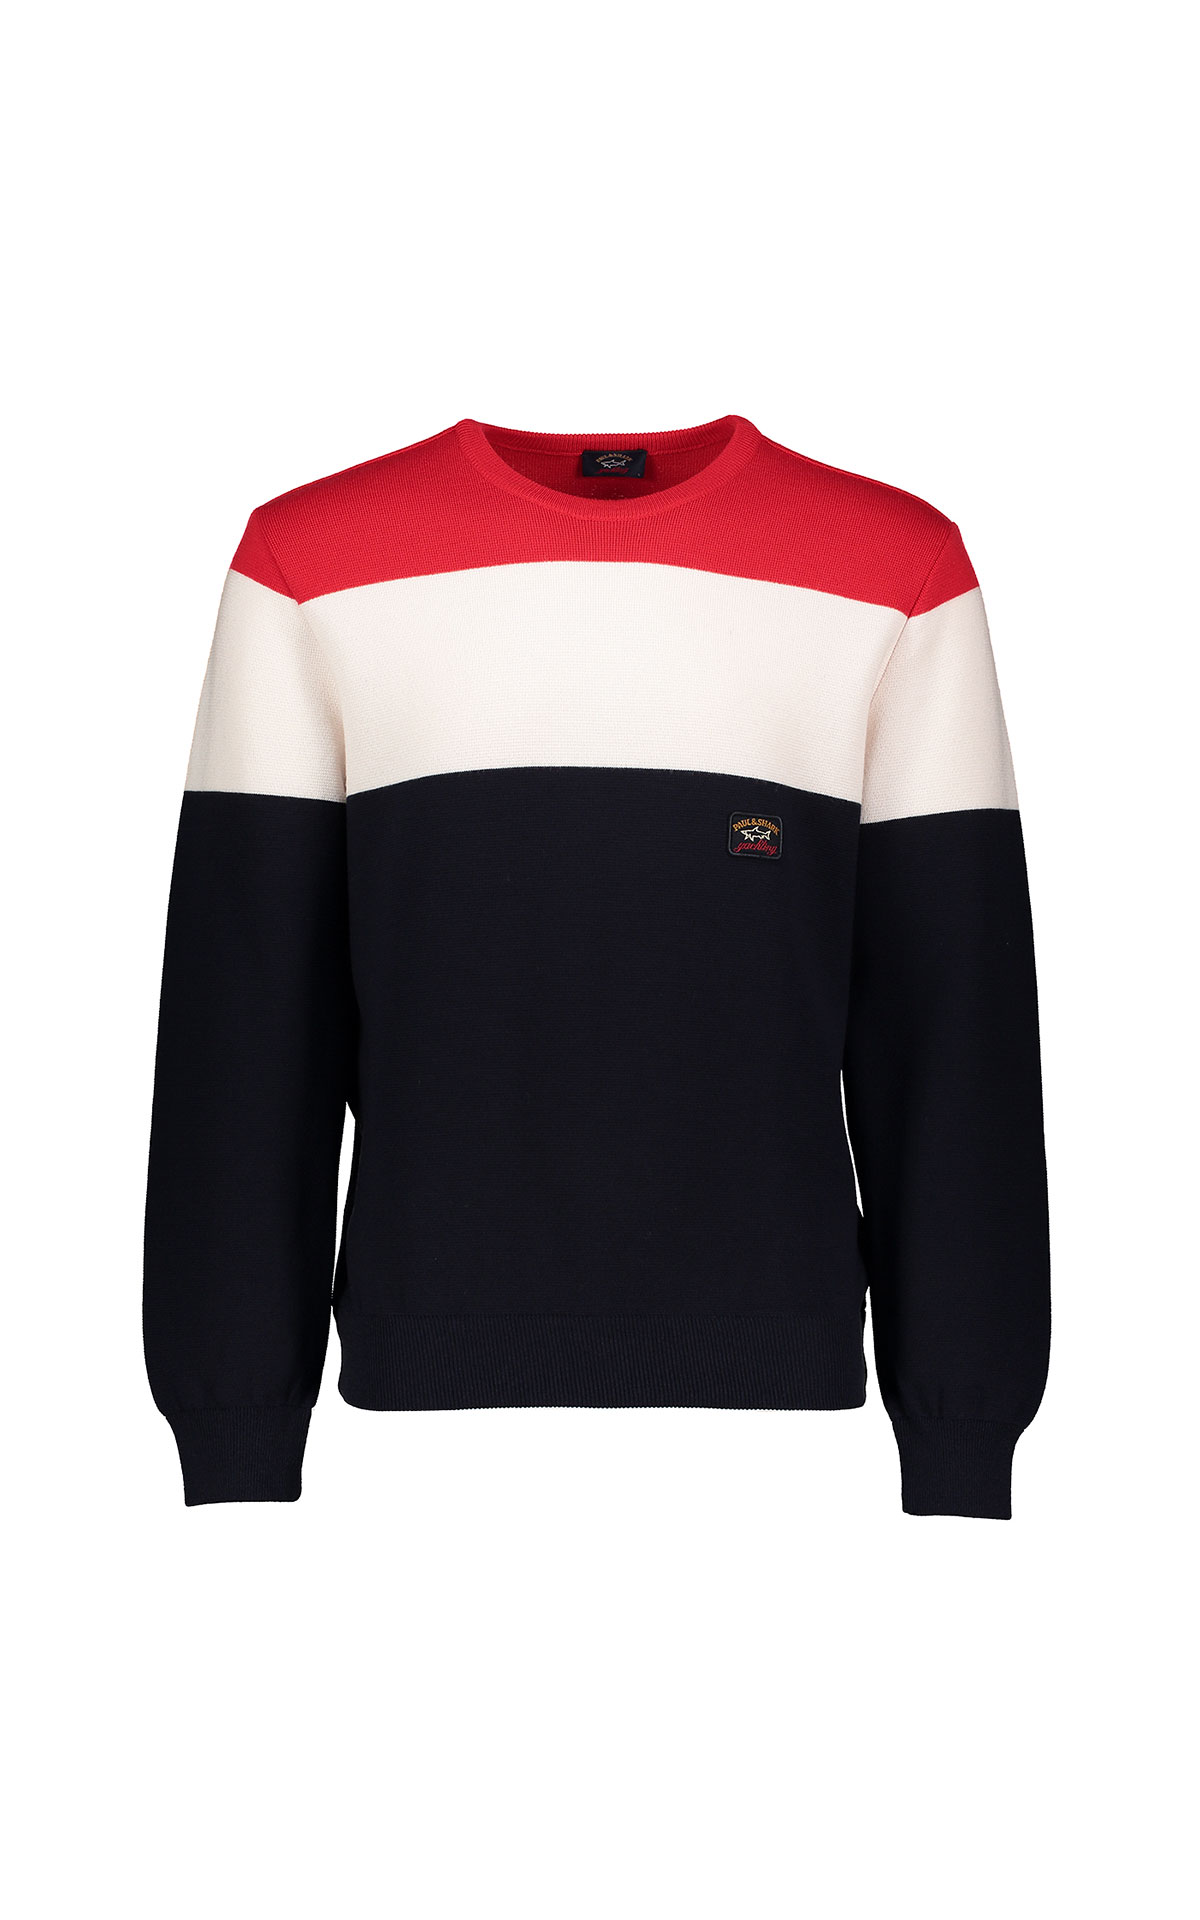 Paul & Shark black red white striped sweatshirt